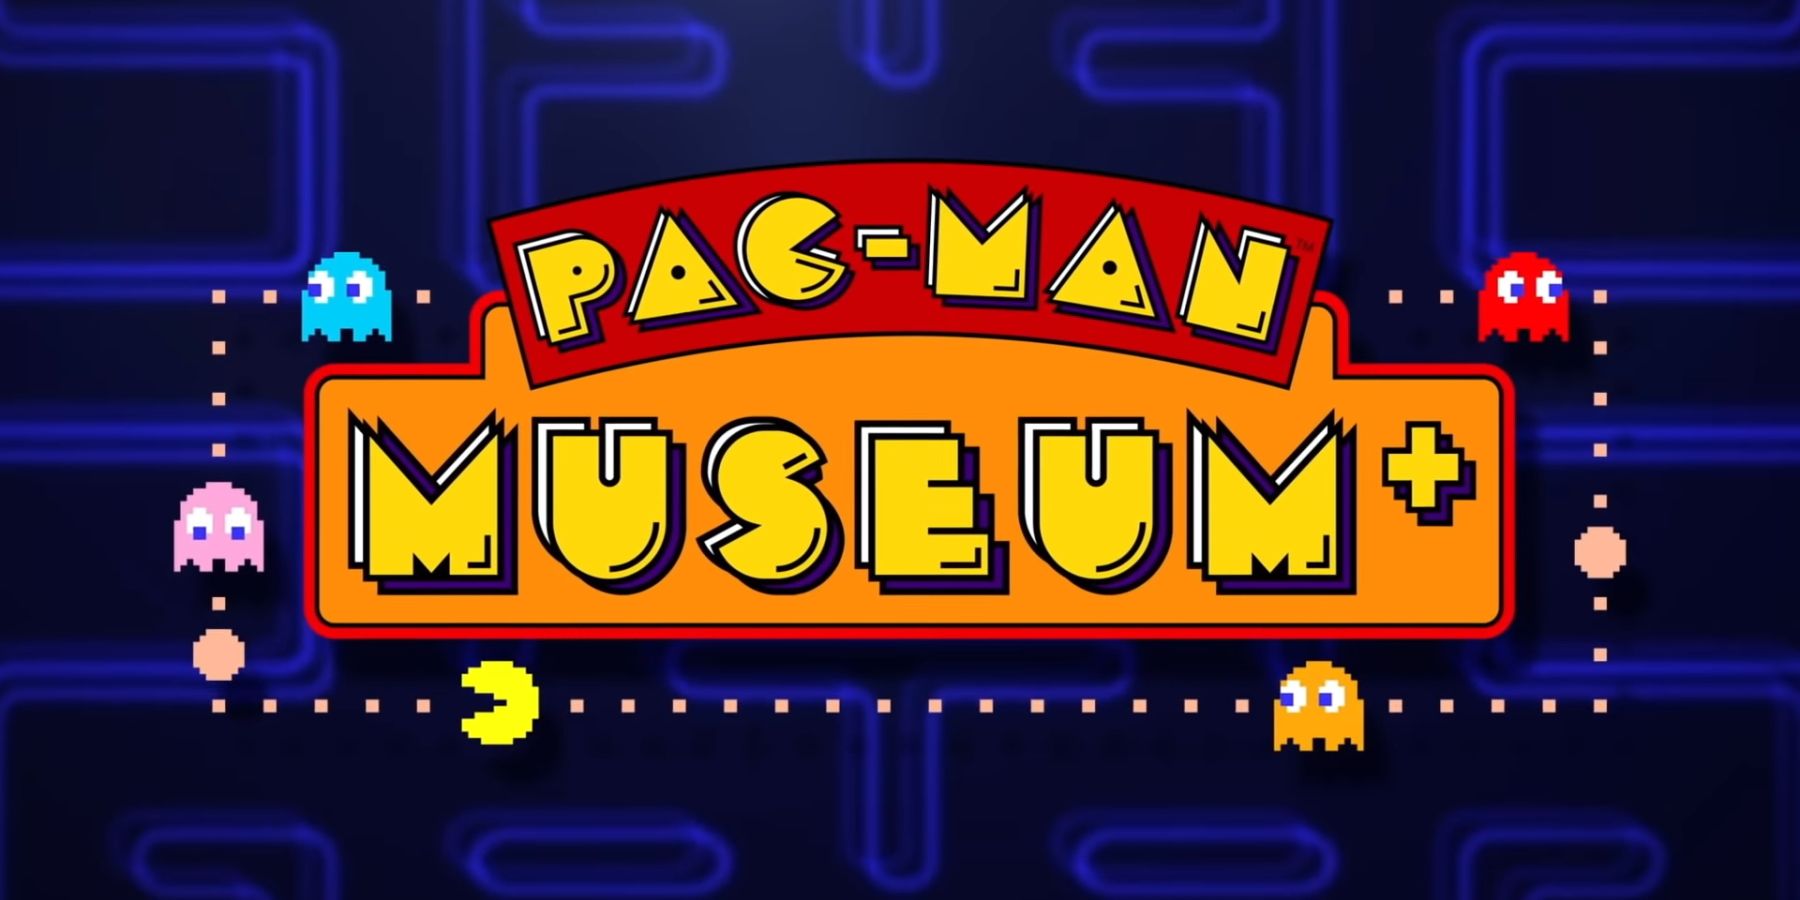 pac-man-museum-plus-release-date-trailer-1